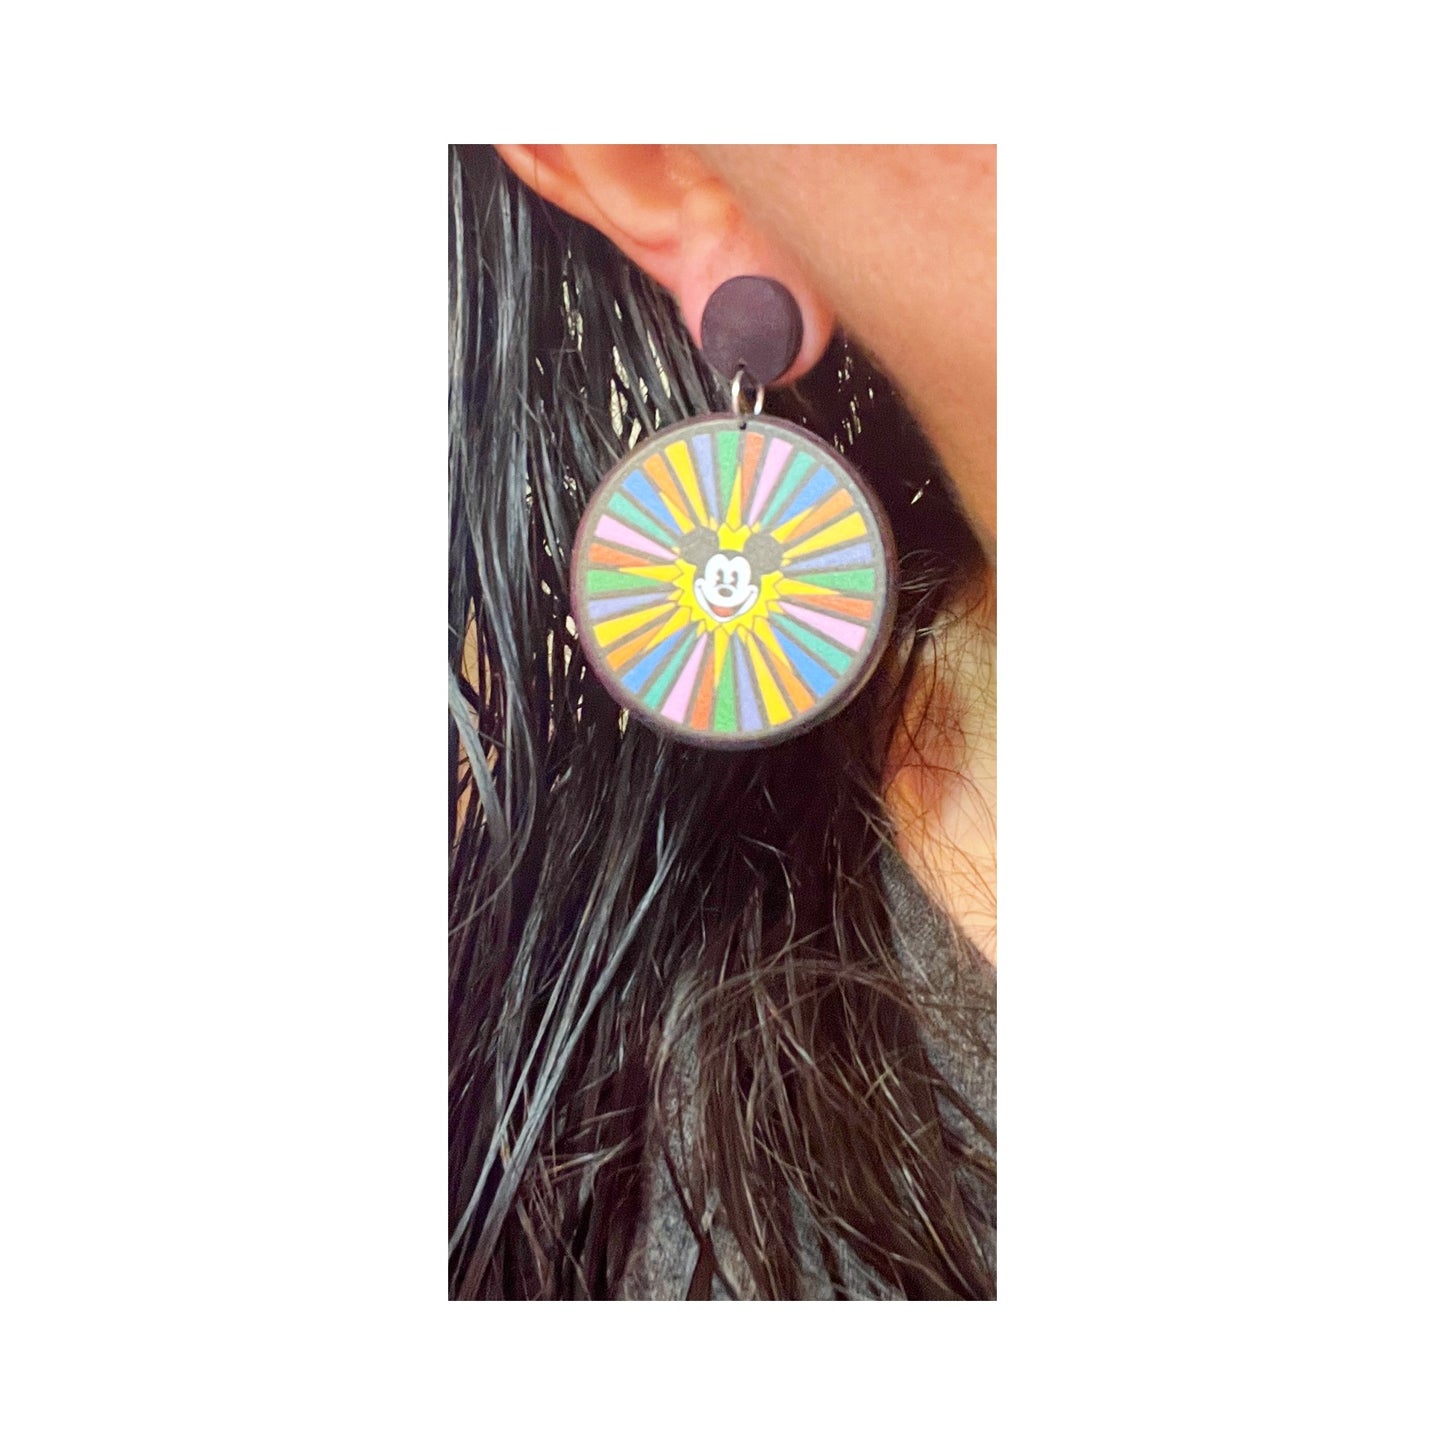 Mouse Rainbow Funwheel Drop Earrings